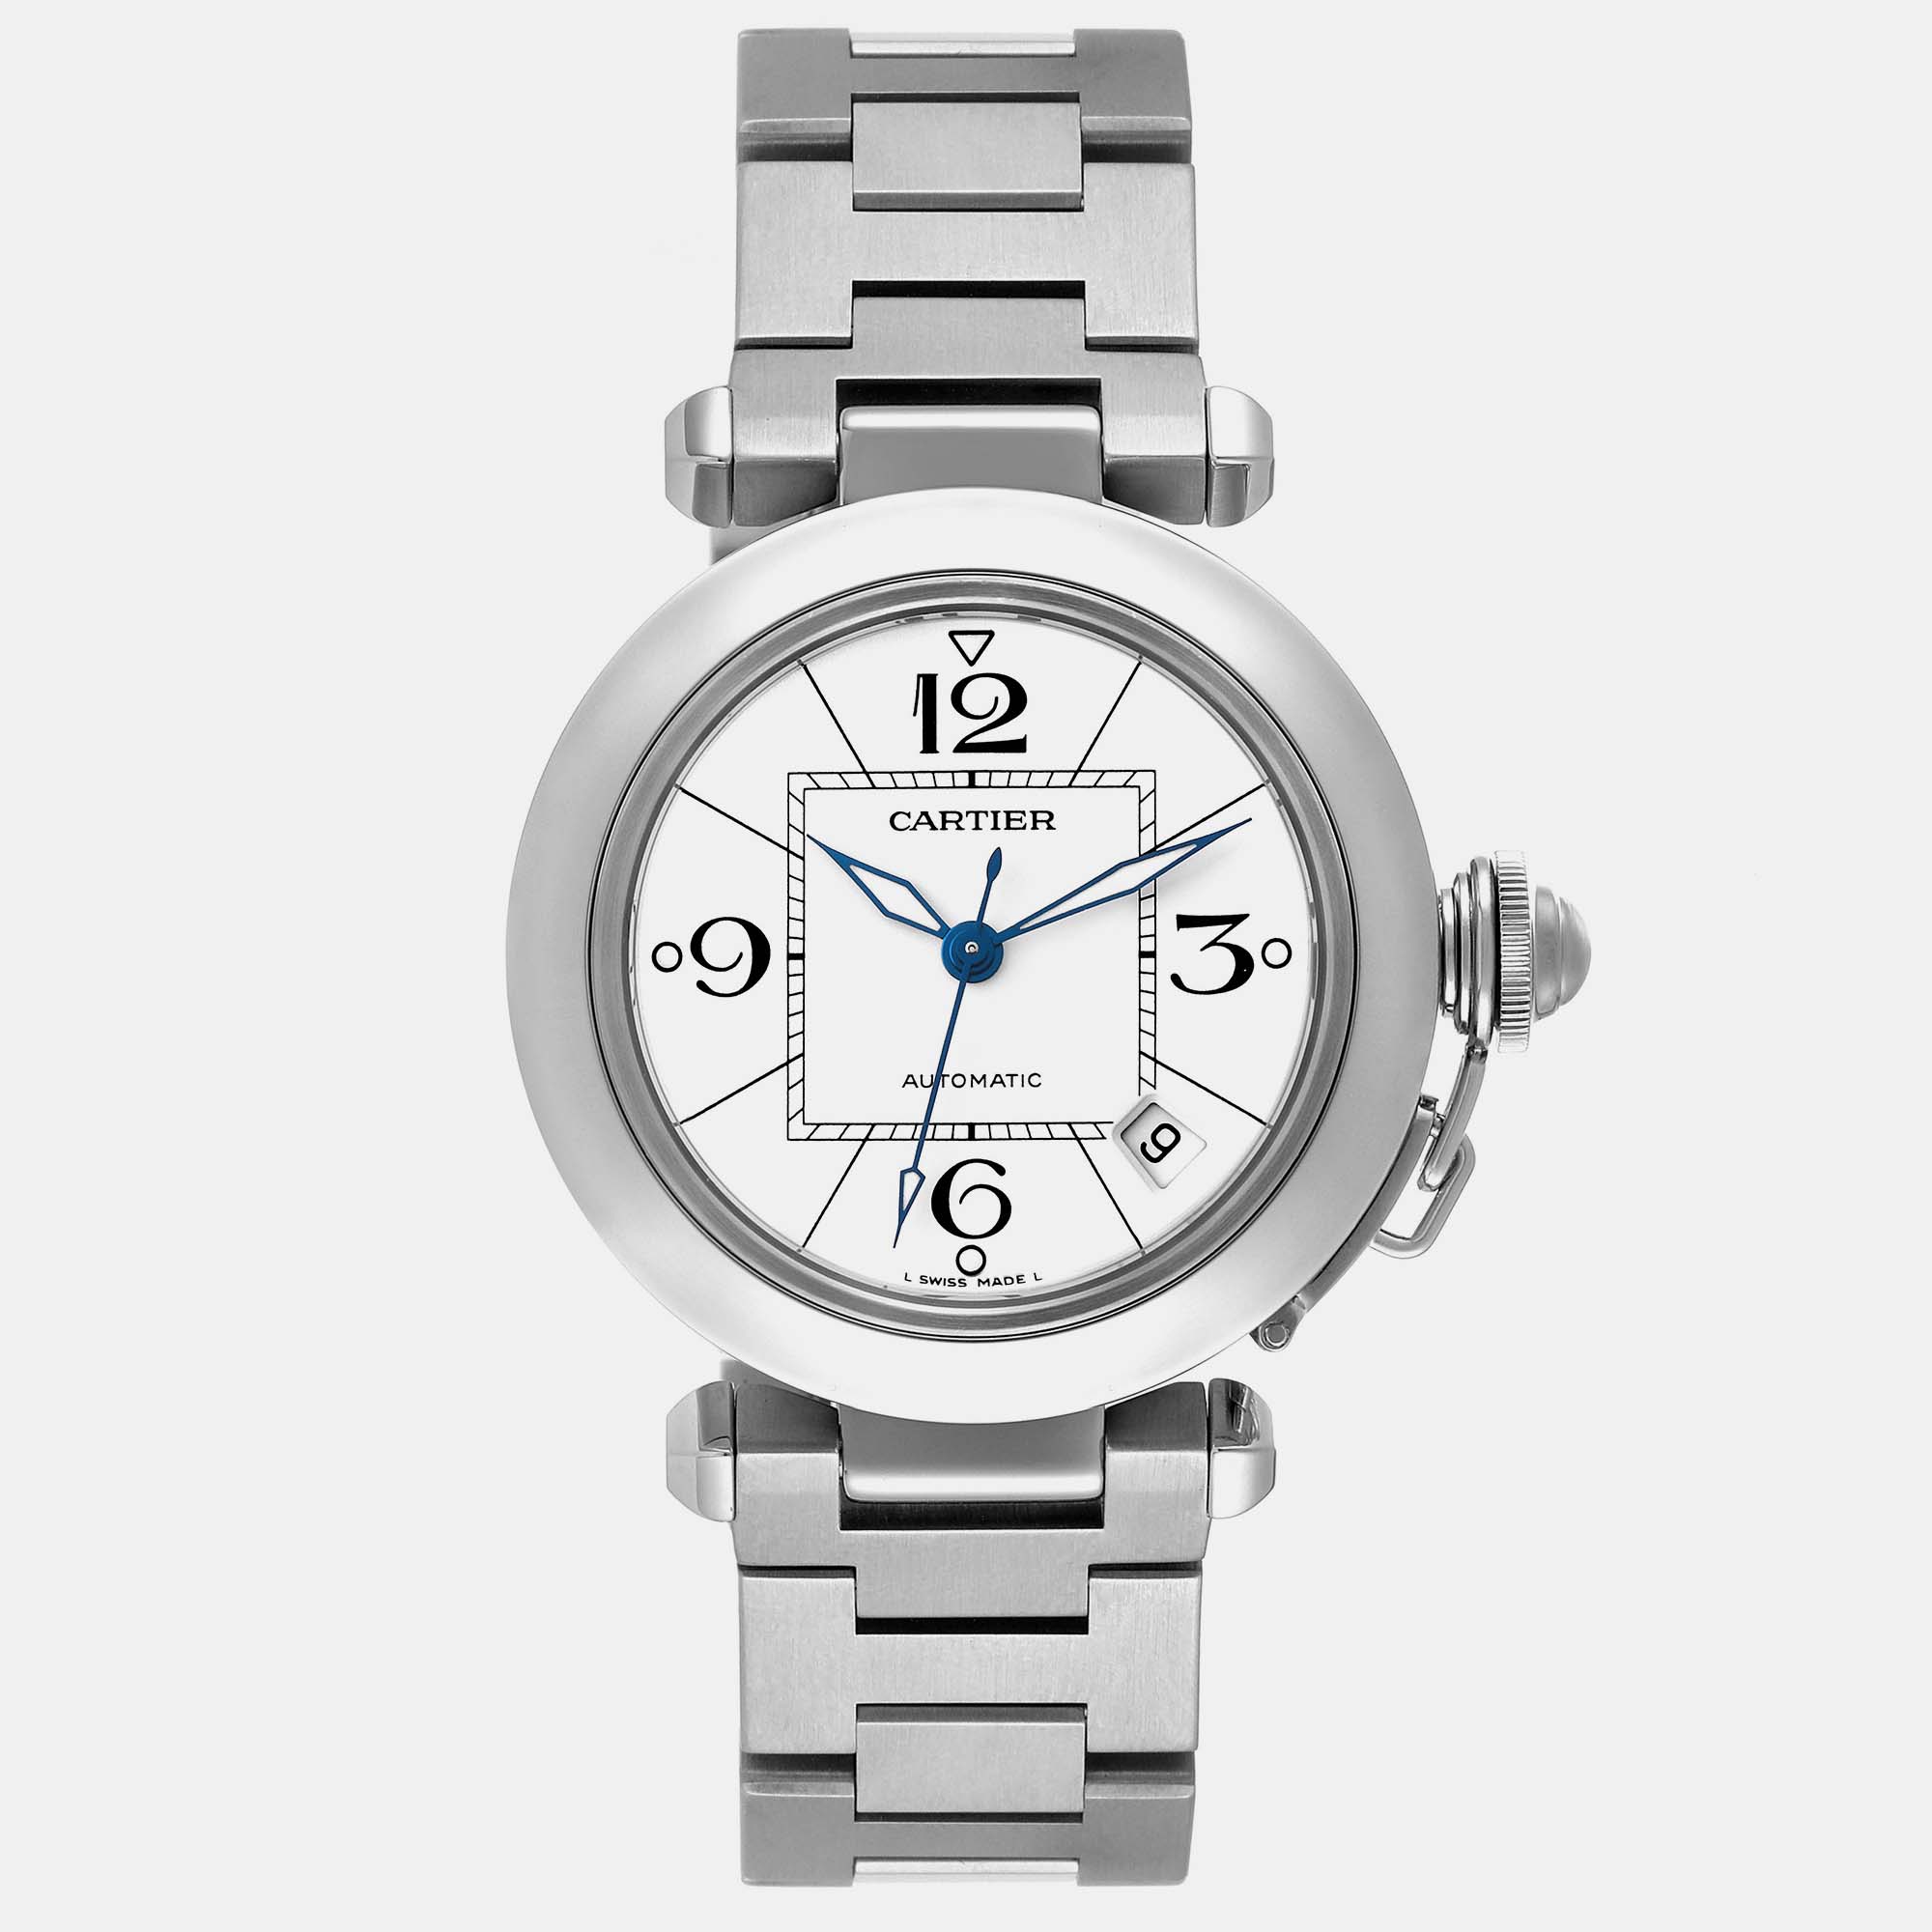 Cartier pasha c midsize white dial automatic steel mens watch w31074m7 35 mm